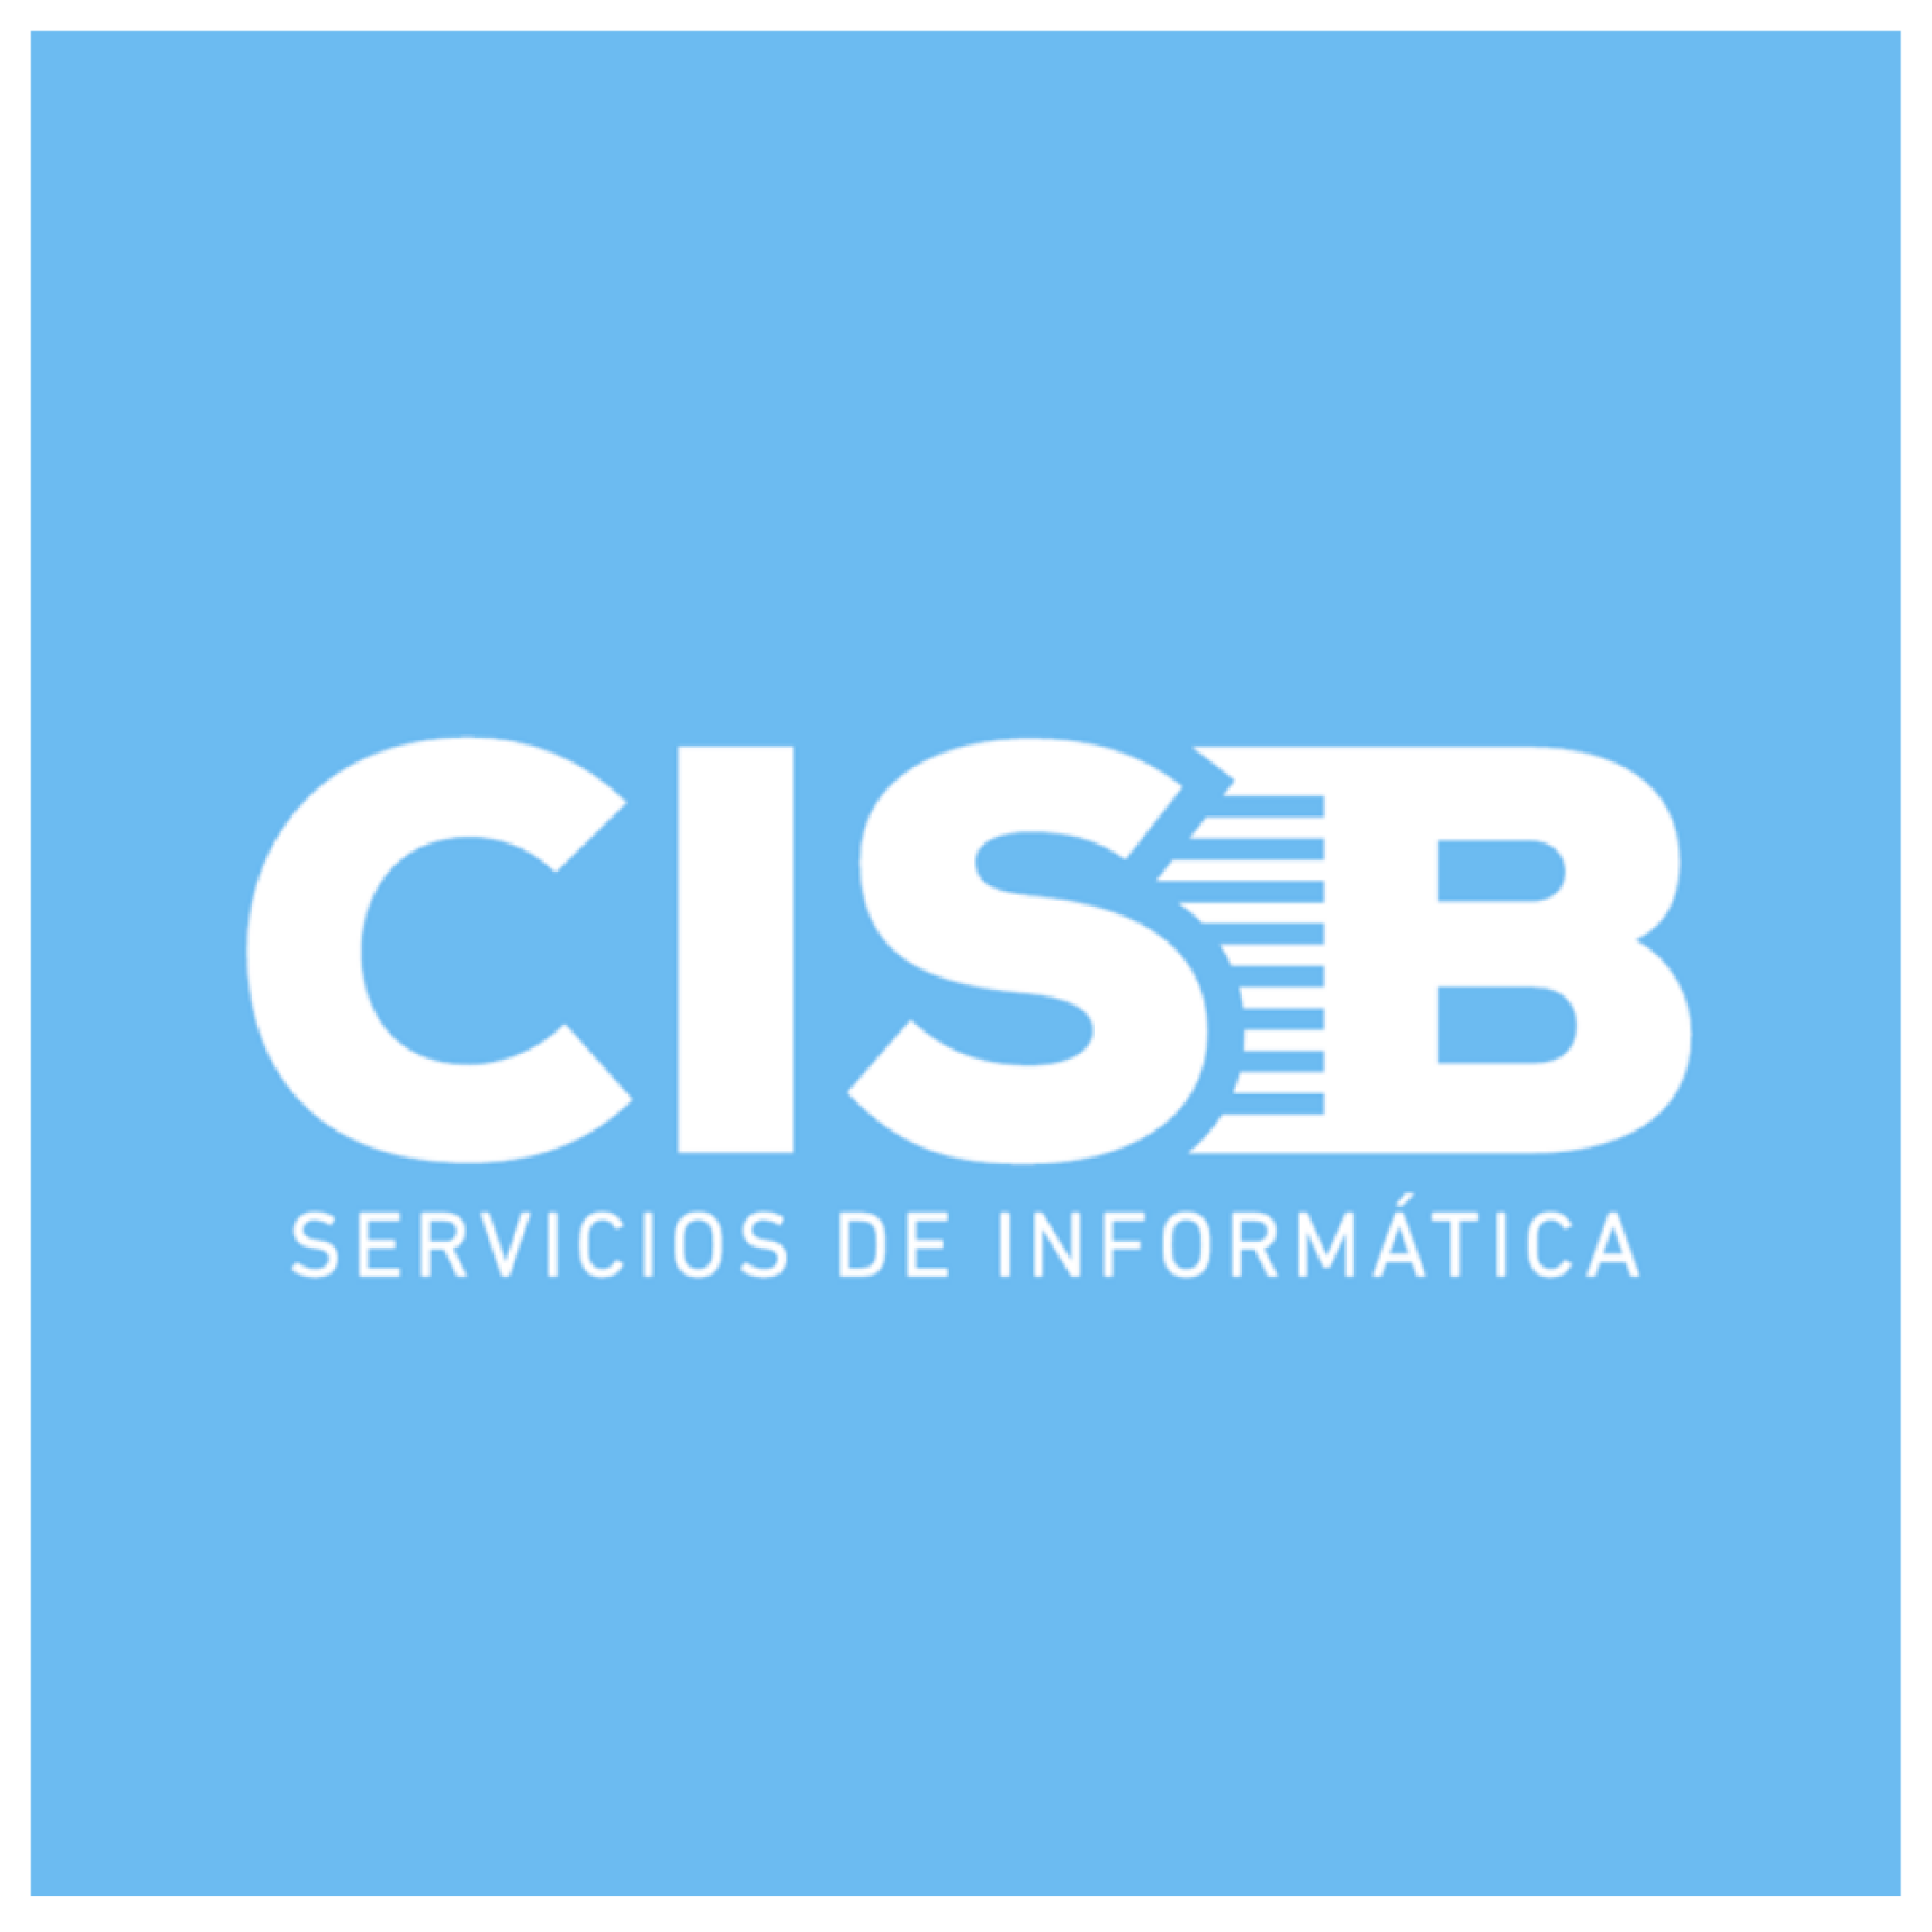 cisb logo-02